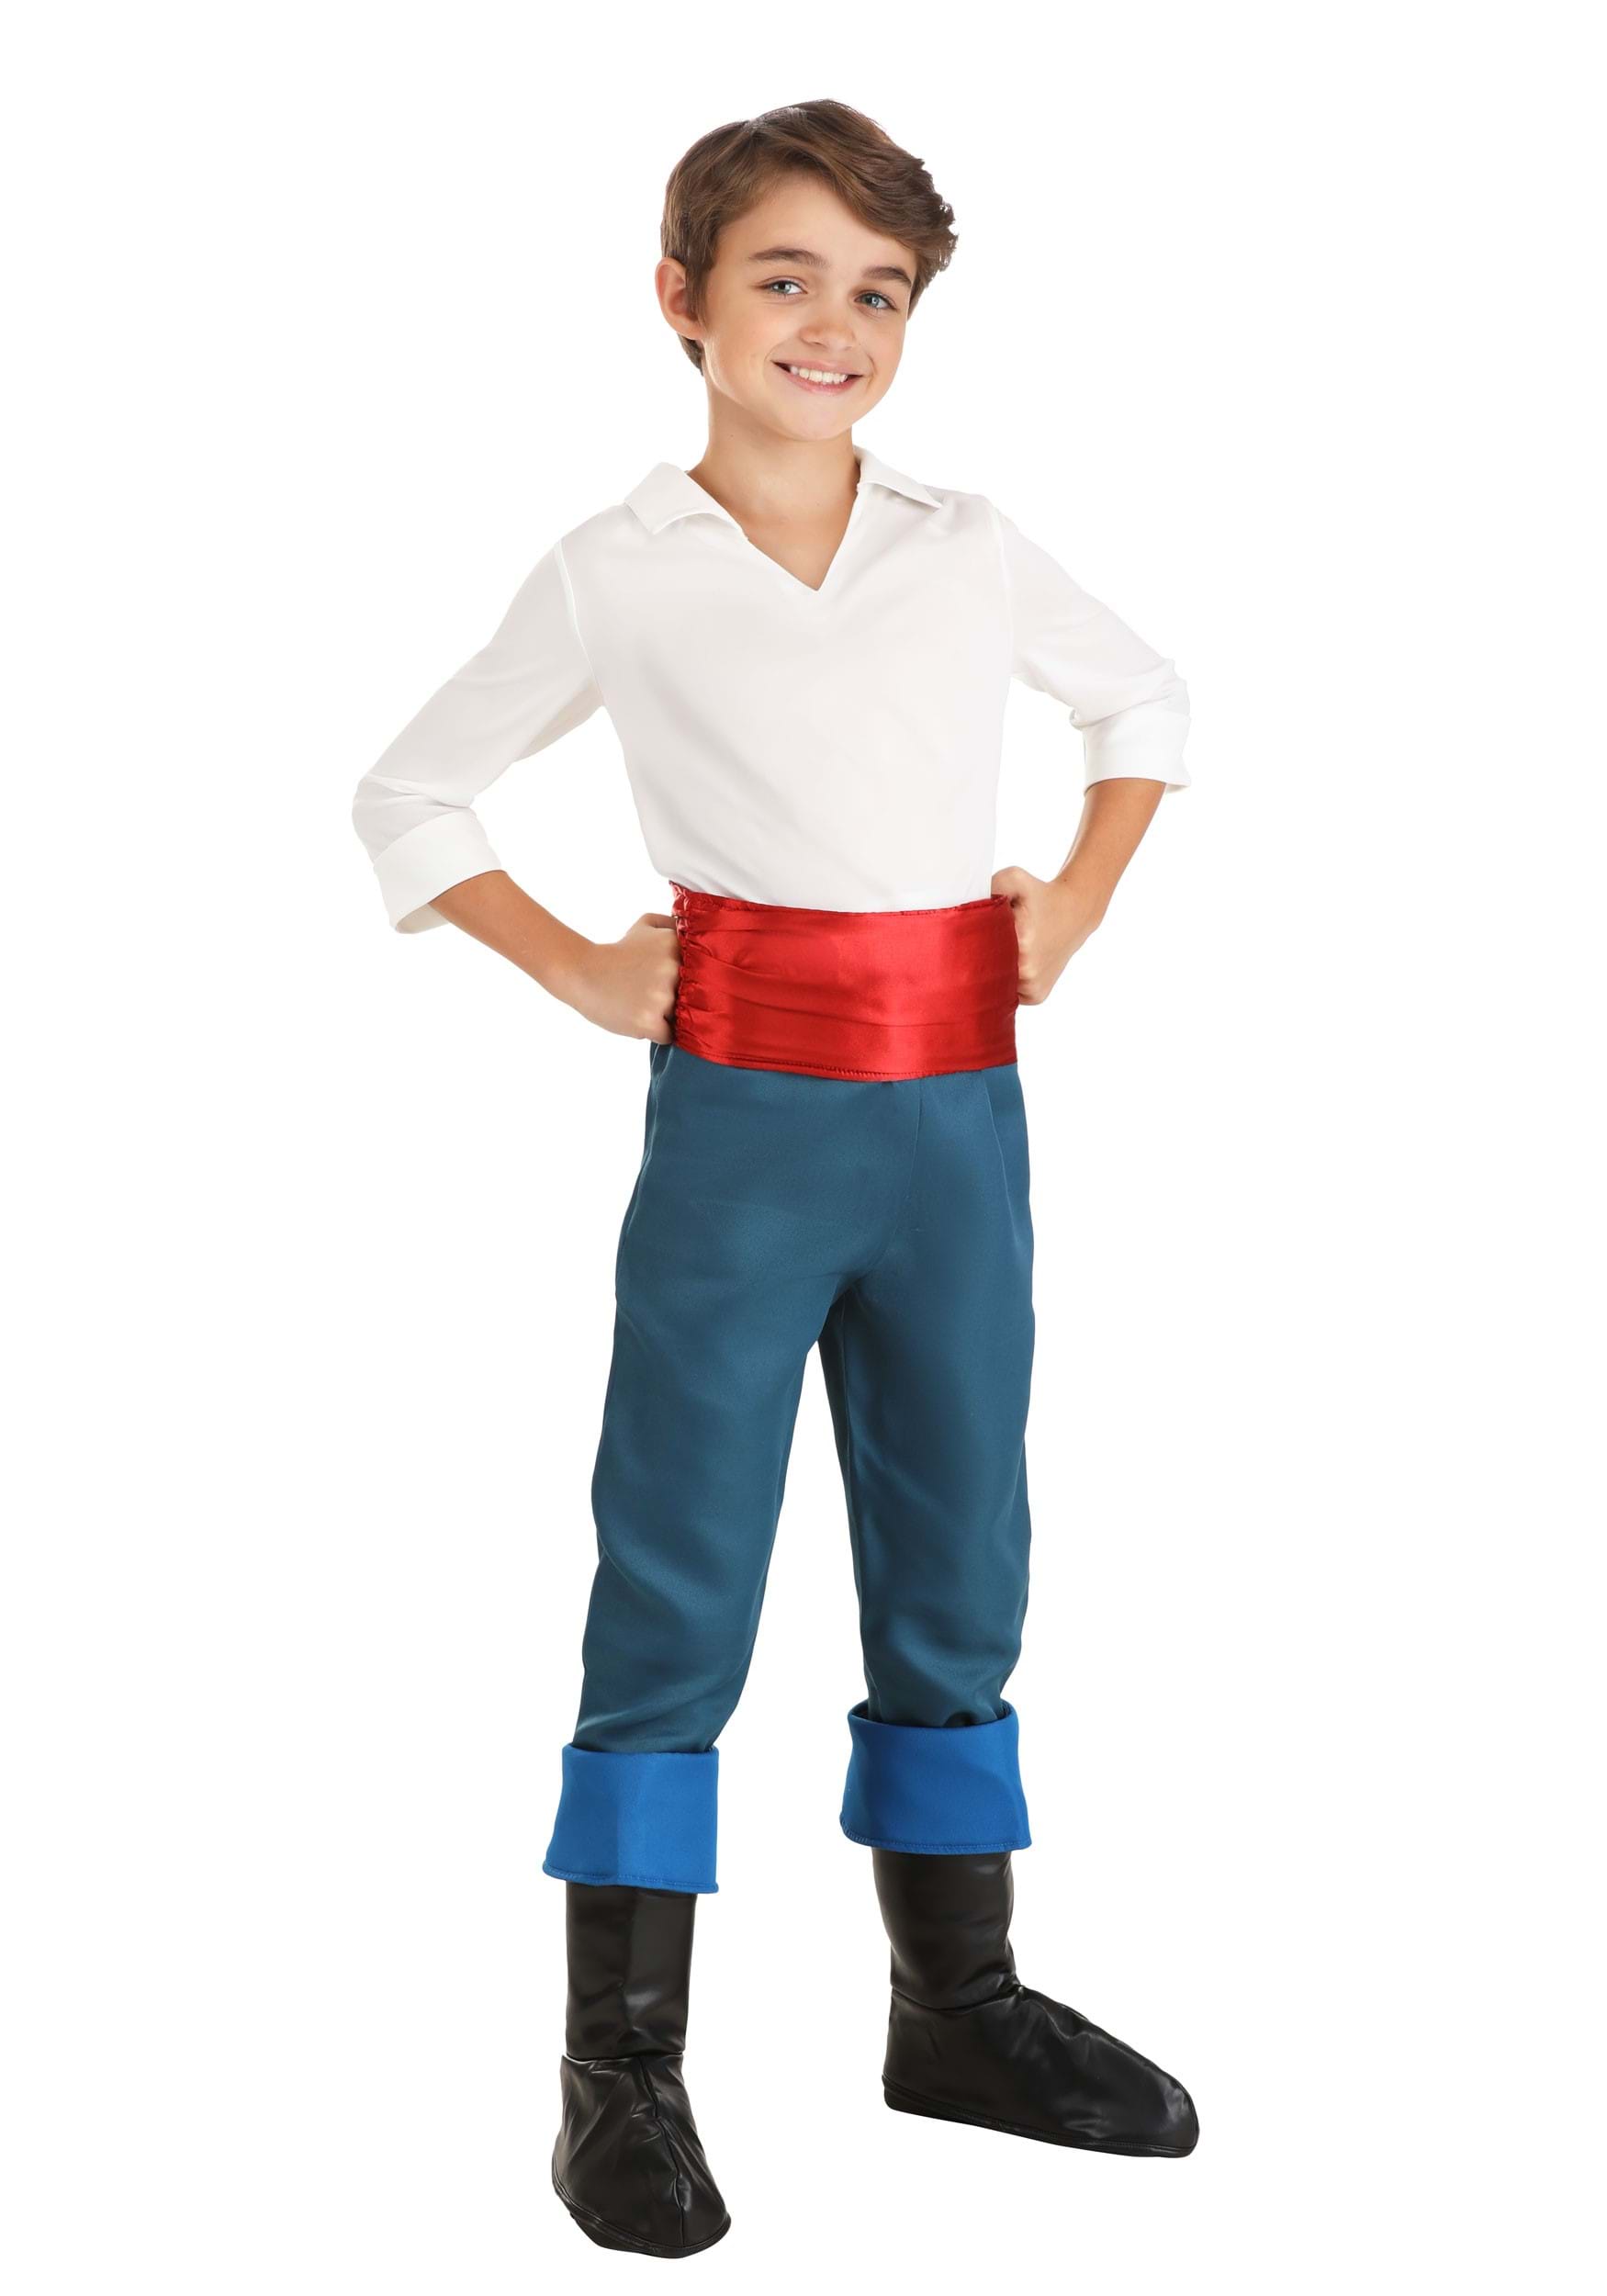 Disney The Little Mermaid Prince Eric Costume for Boys